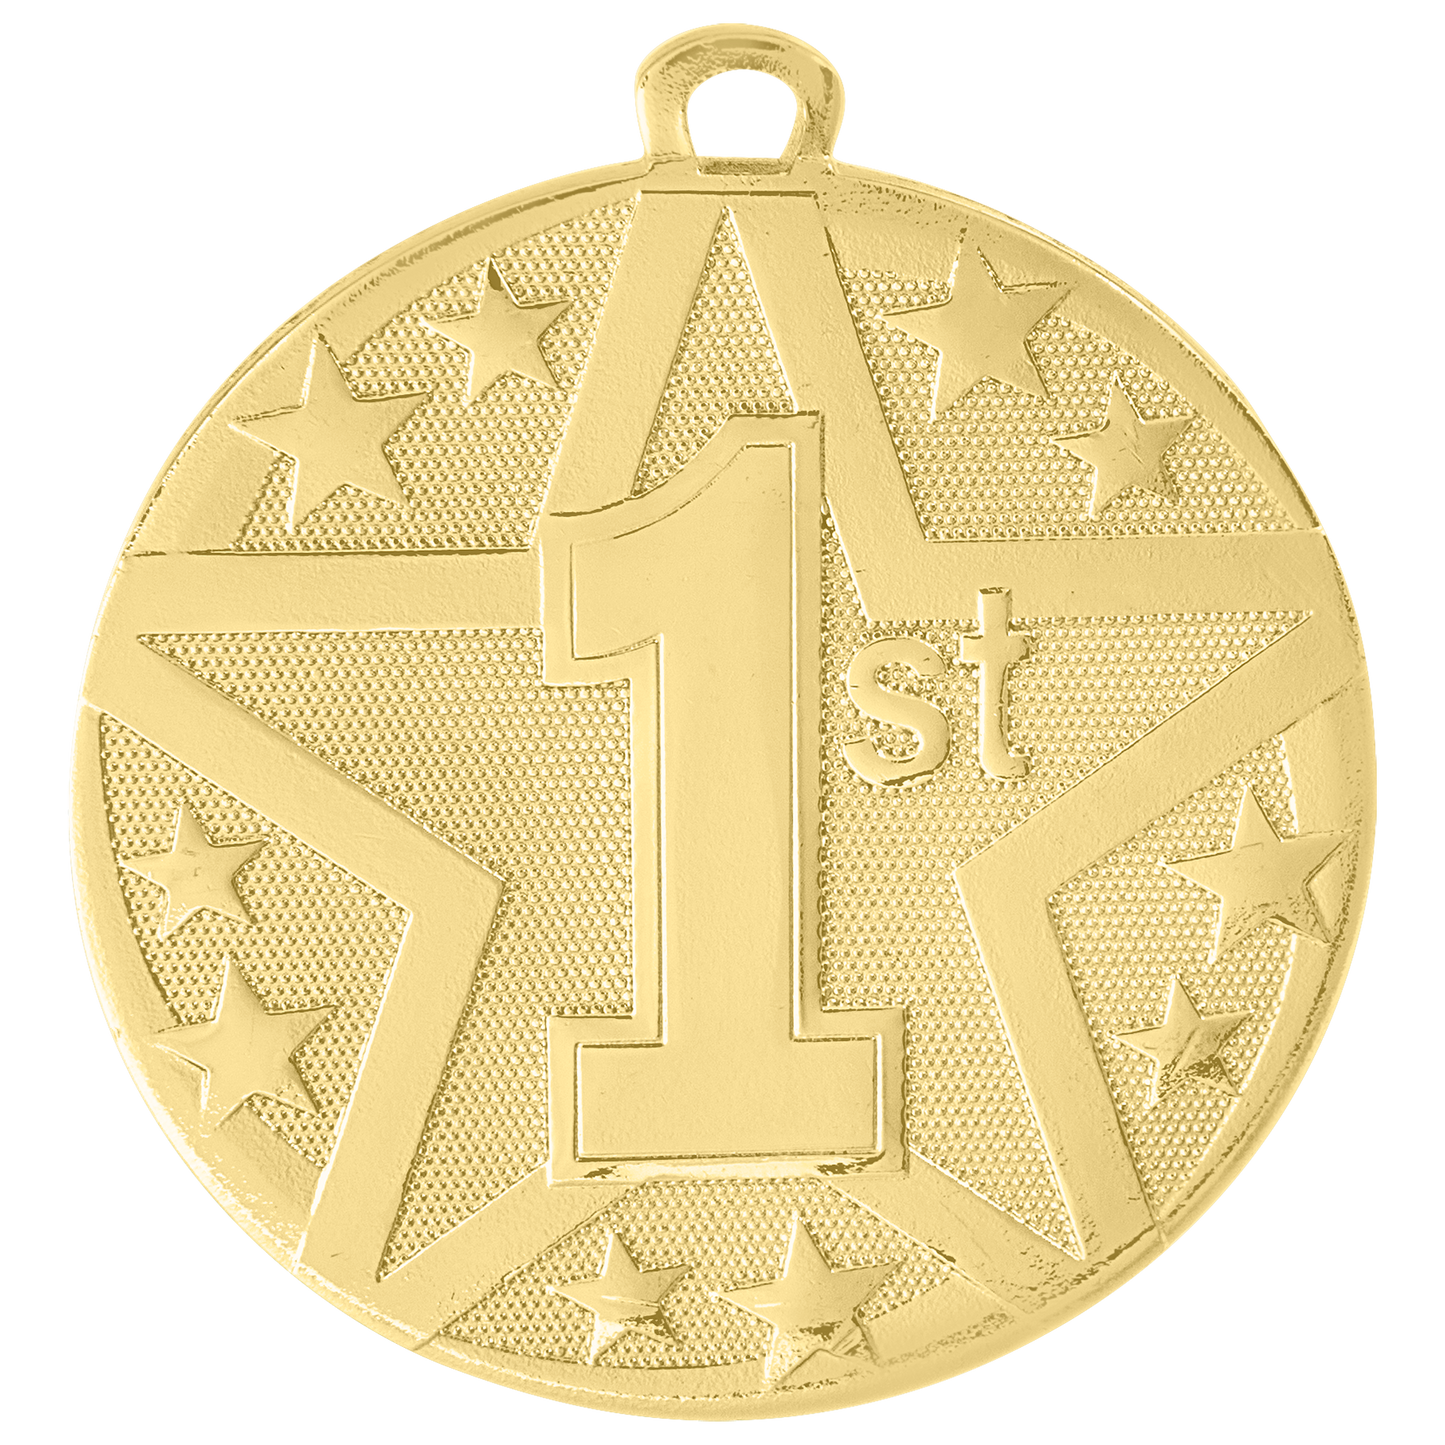 2" Superstar 1st/2nd/3rd Place Medal